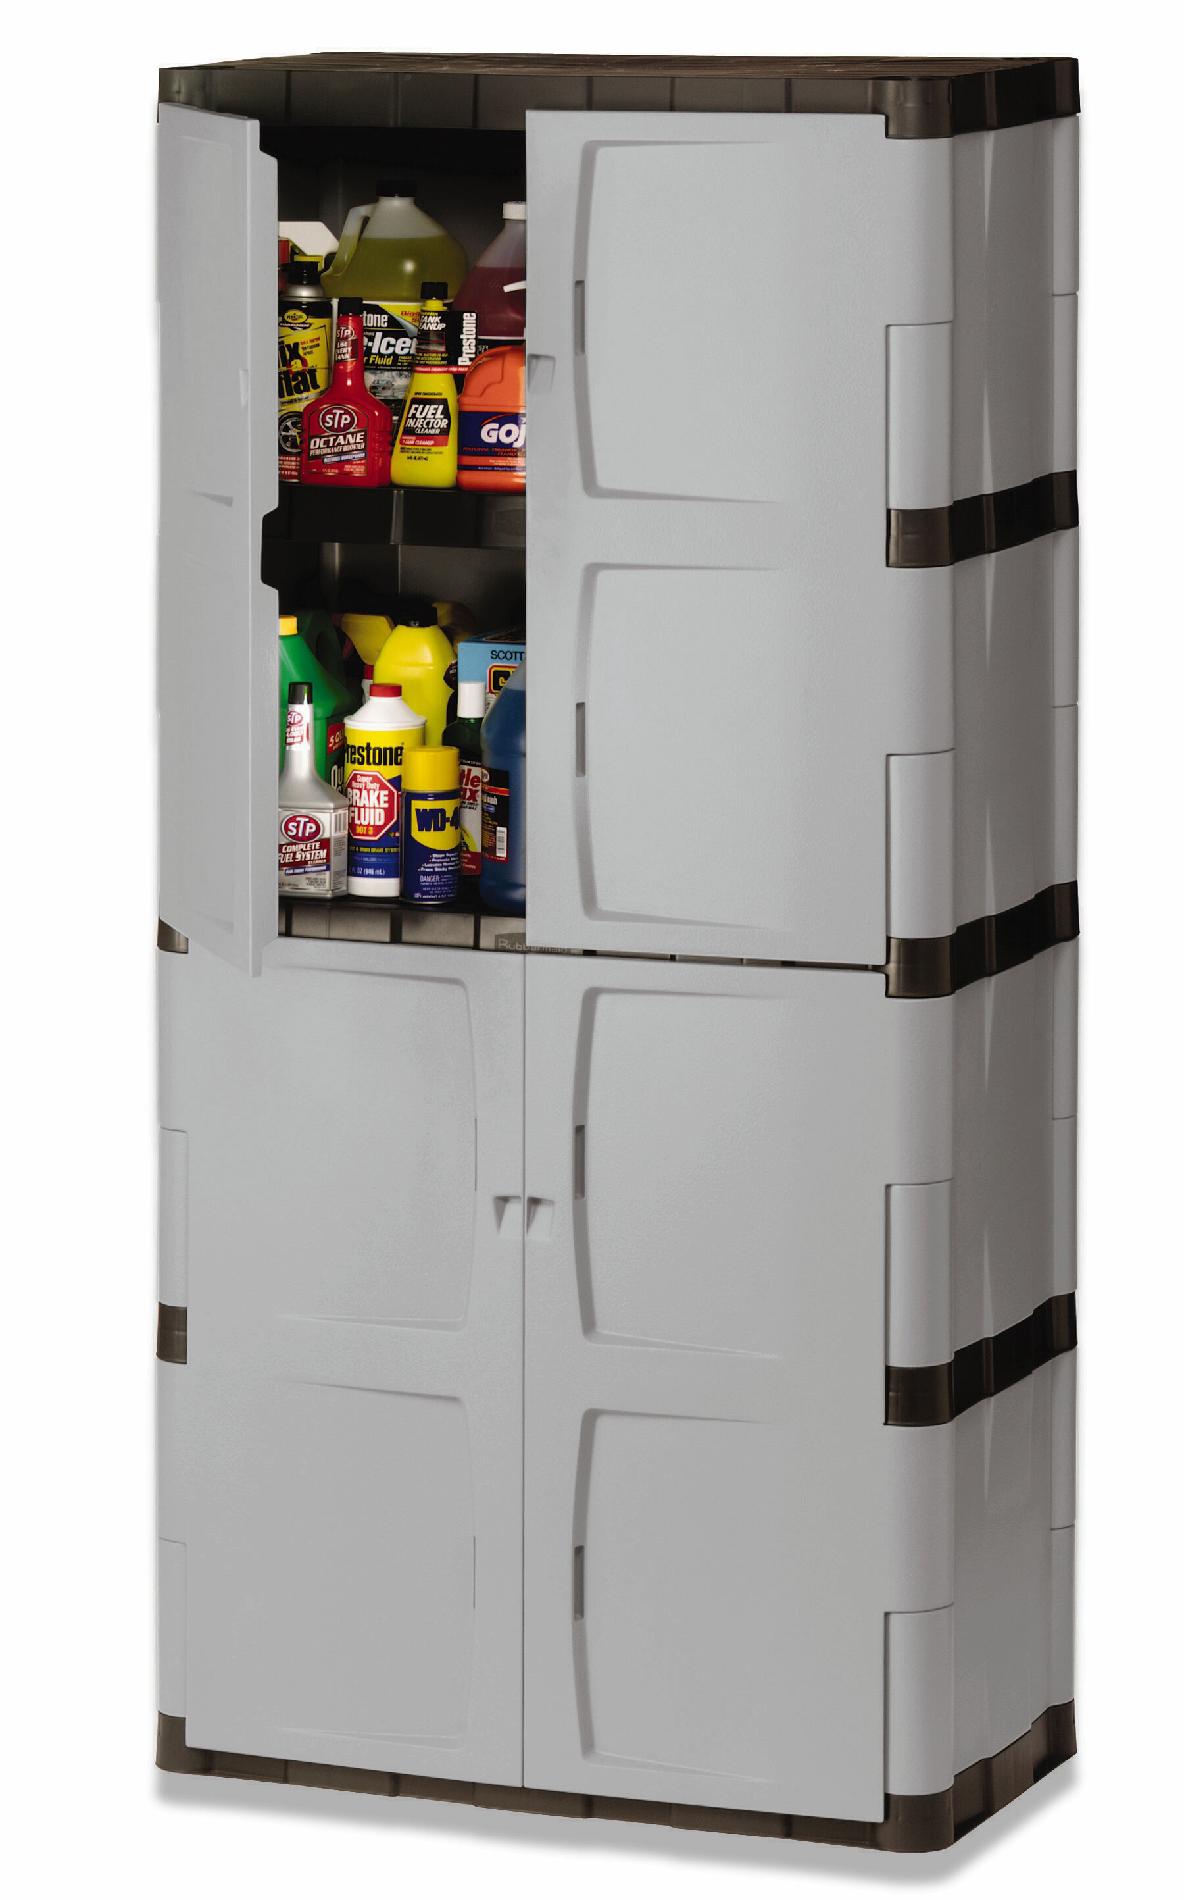 Double Door Cabinet, Rubbermaid Pantry Shelving